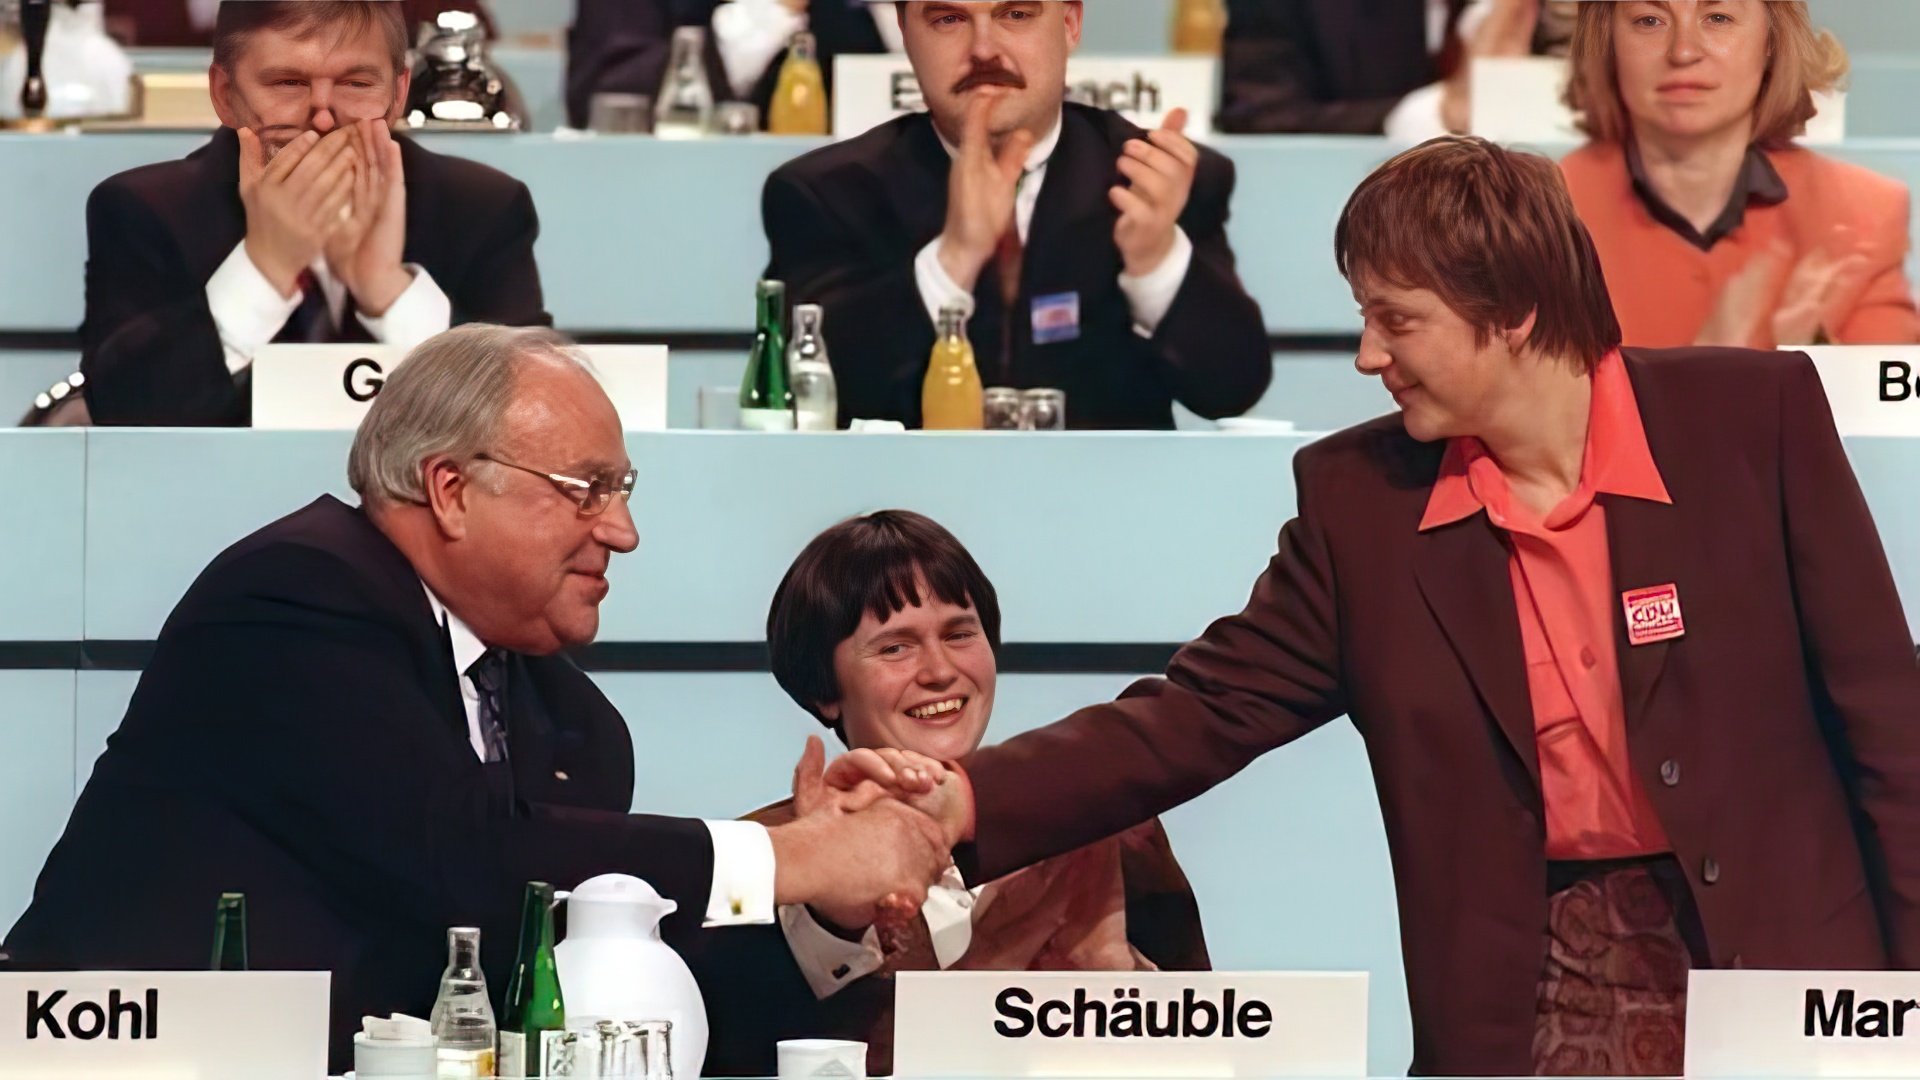 Angela Merkel and Helmut Kohl